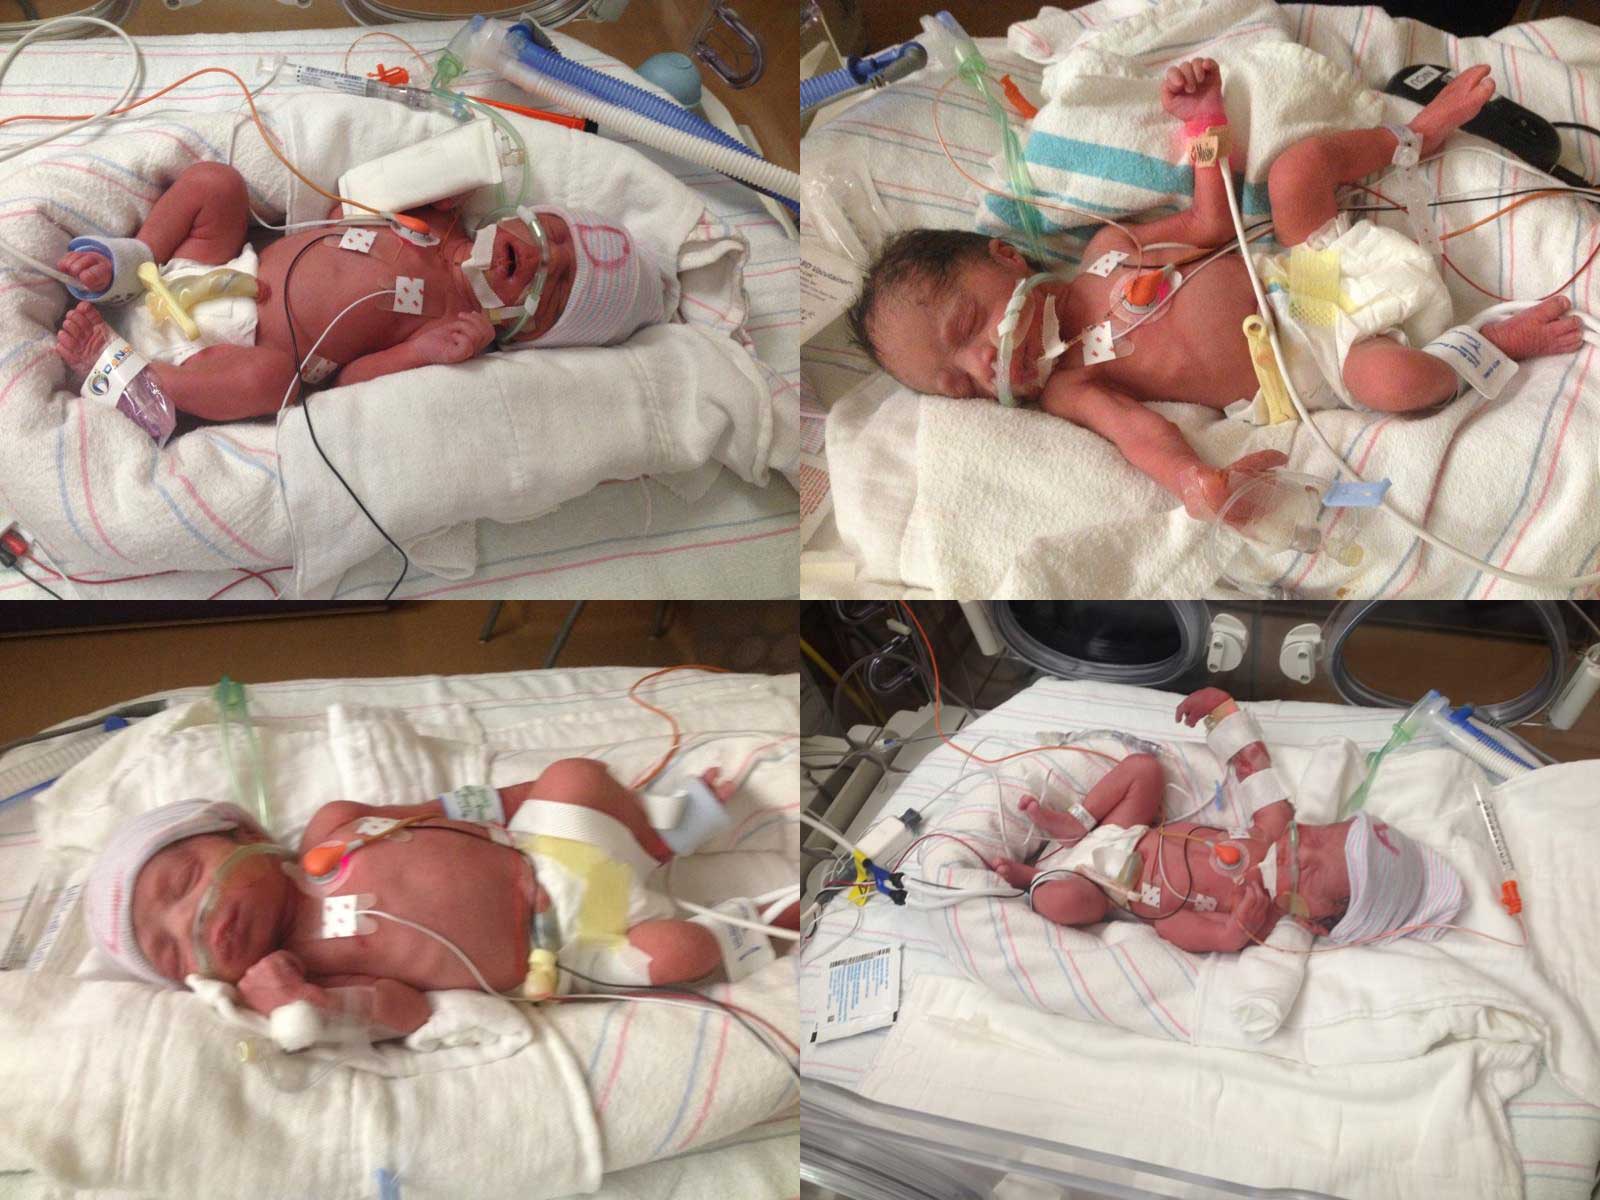 Quadruplets born to Erica Morales at a Phoenix hospital on Jan. 15, 2015